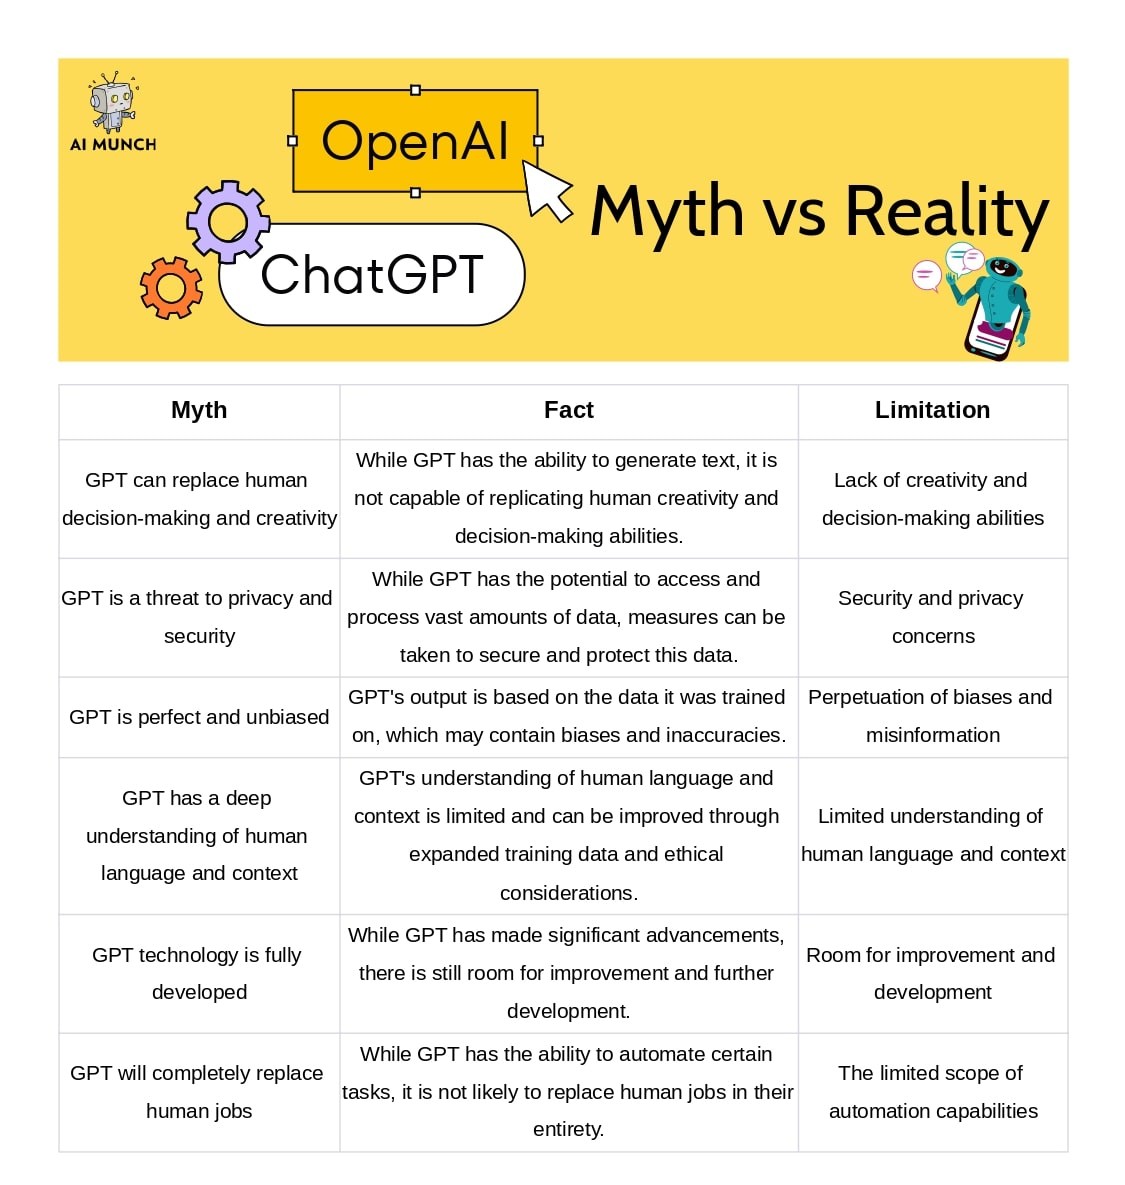 openai gpt limitations, OpenAI GPT will Rule the World: 6 Myths vs Reality